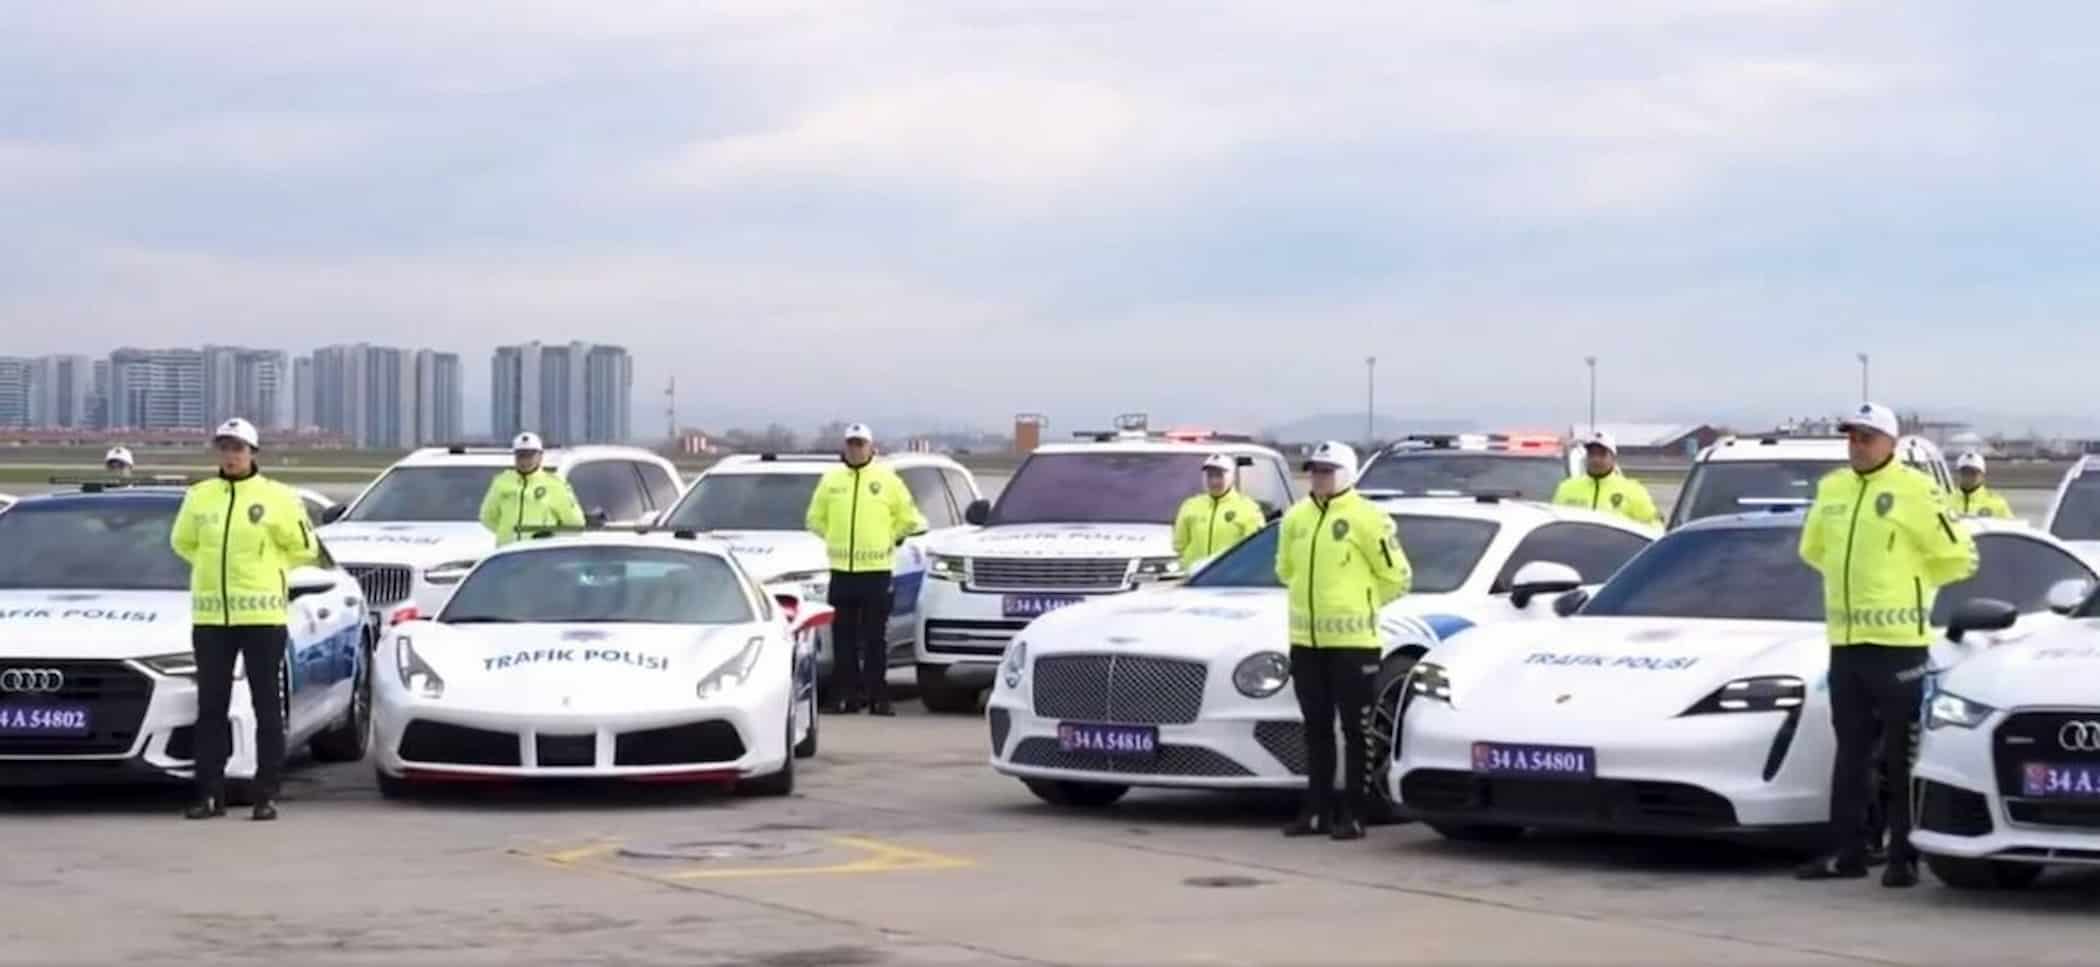 turkish police sports cars fleet 1170x539 1